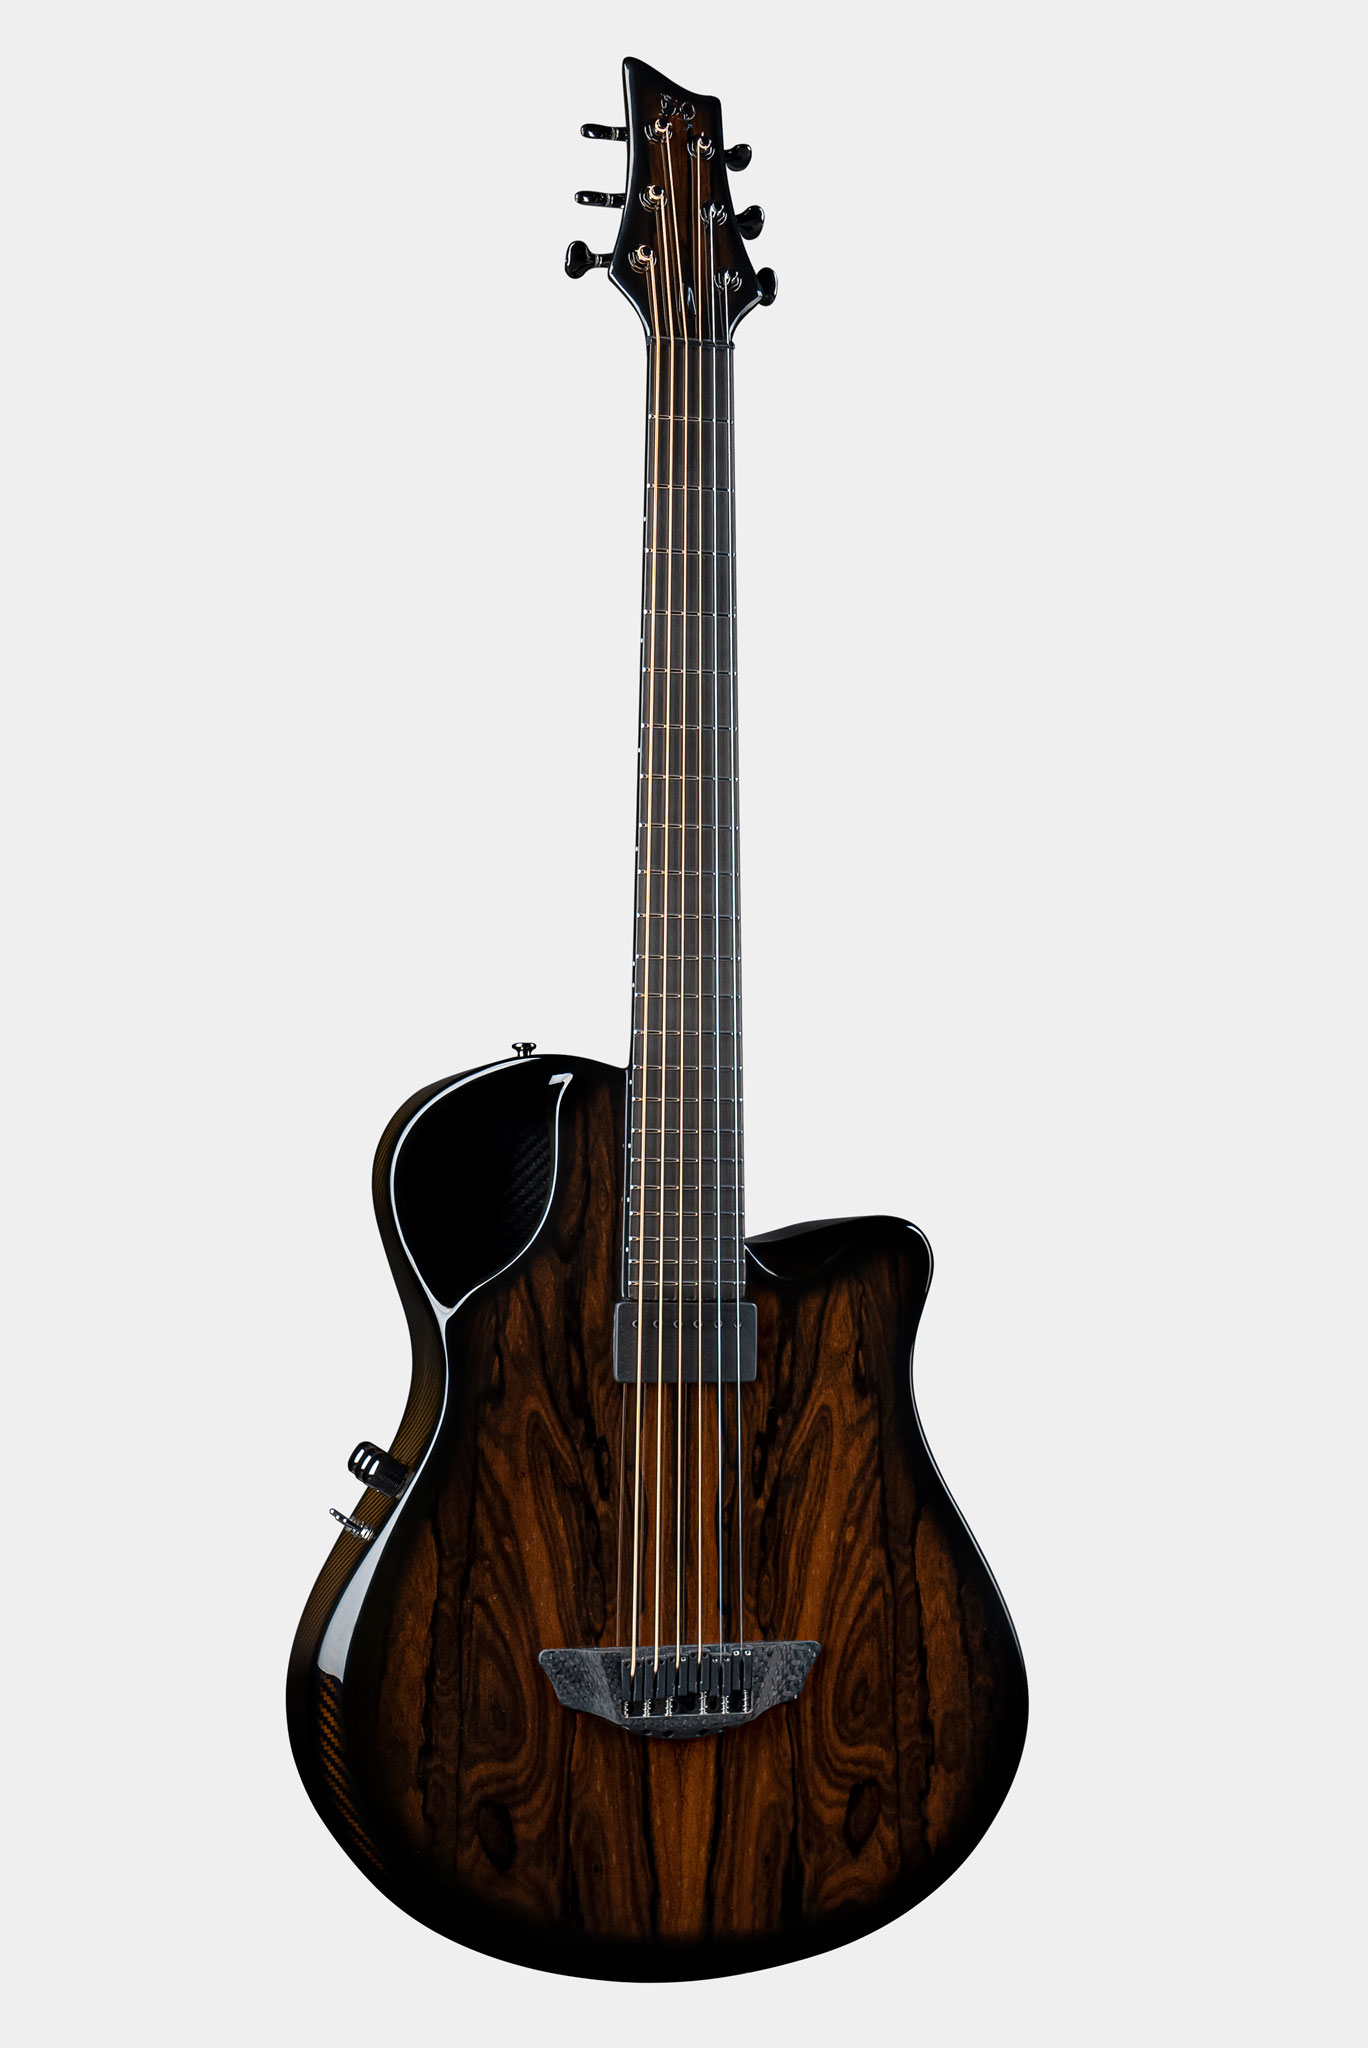 Emerald X10 Carbon Fiber Guitar in Ziricote